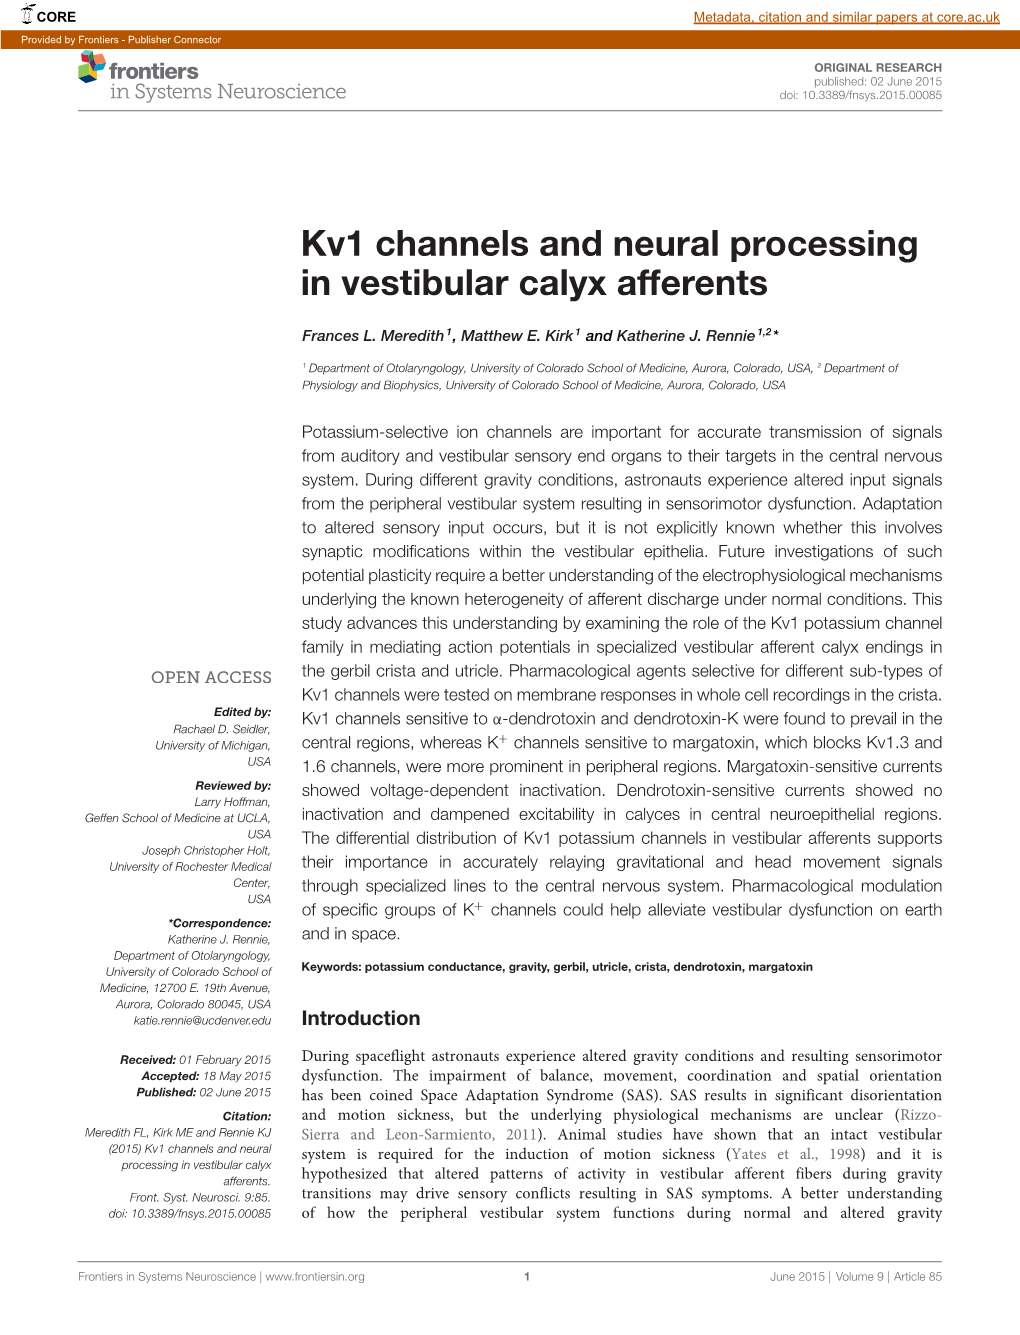 Kv1 Channels and Neural Processing in Vestibular Calyx Afferents